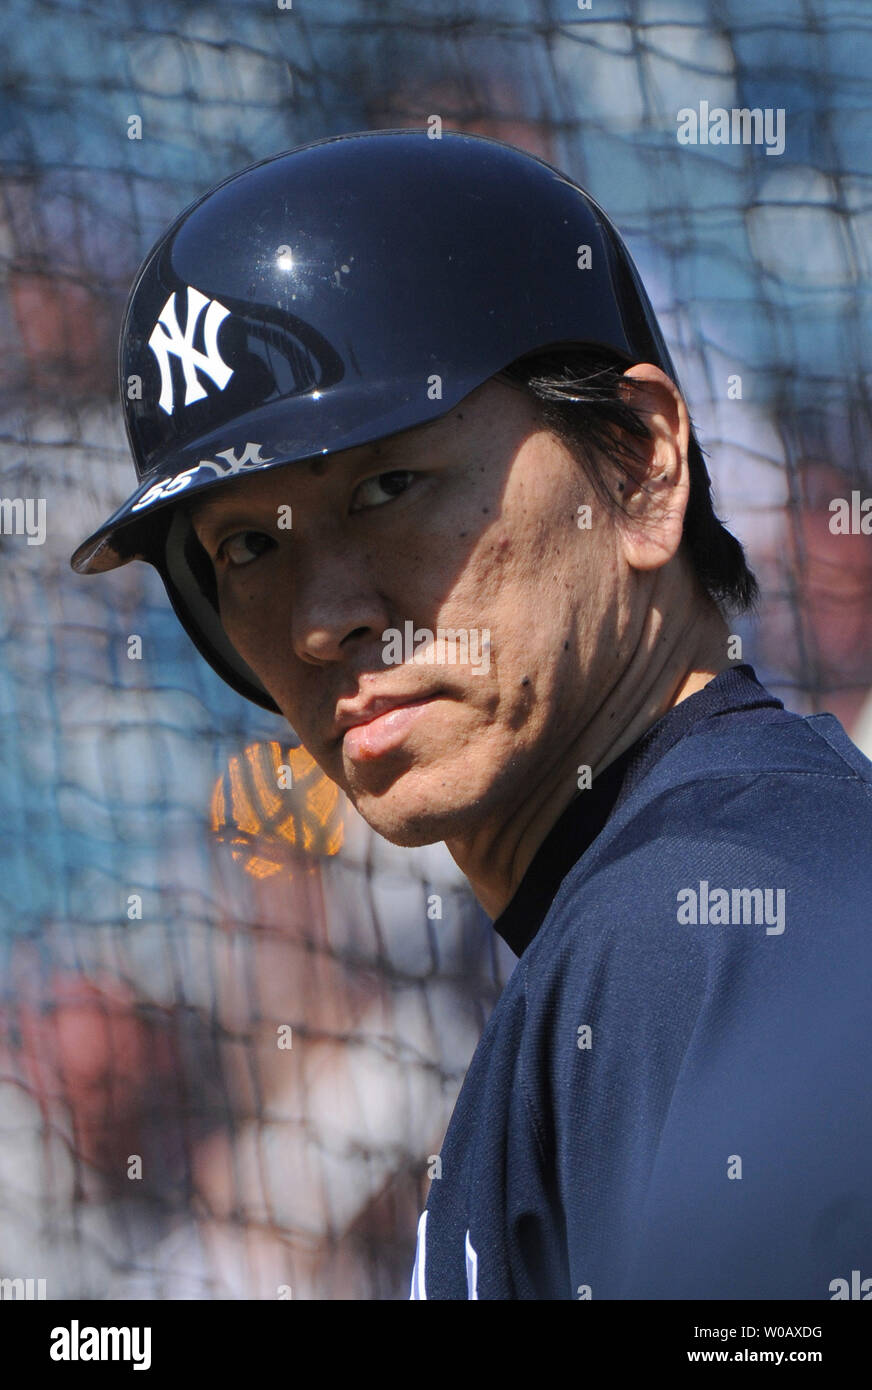 New York Yankees' outfielder Hideki Matsui, of Japan, fields a